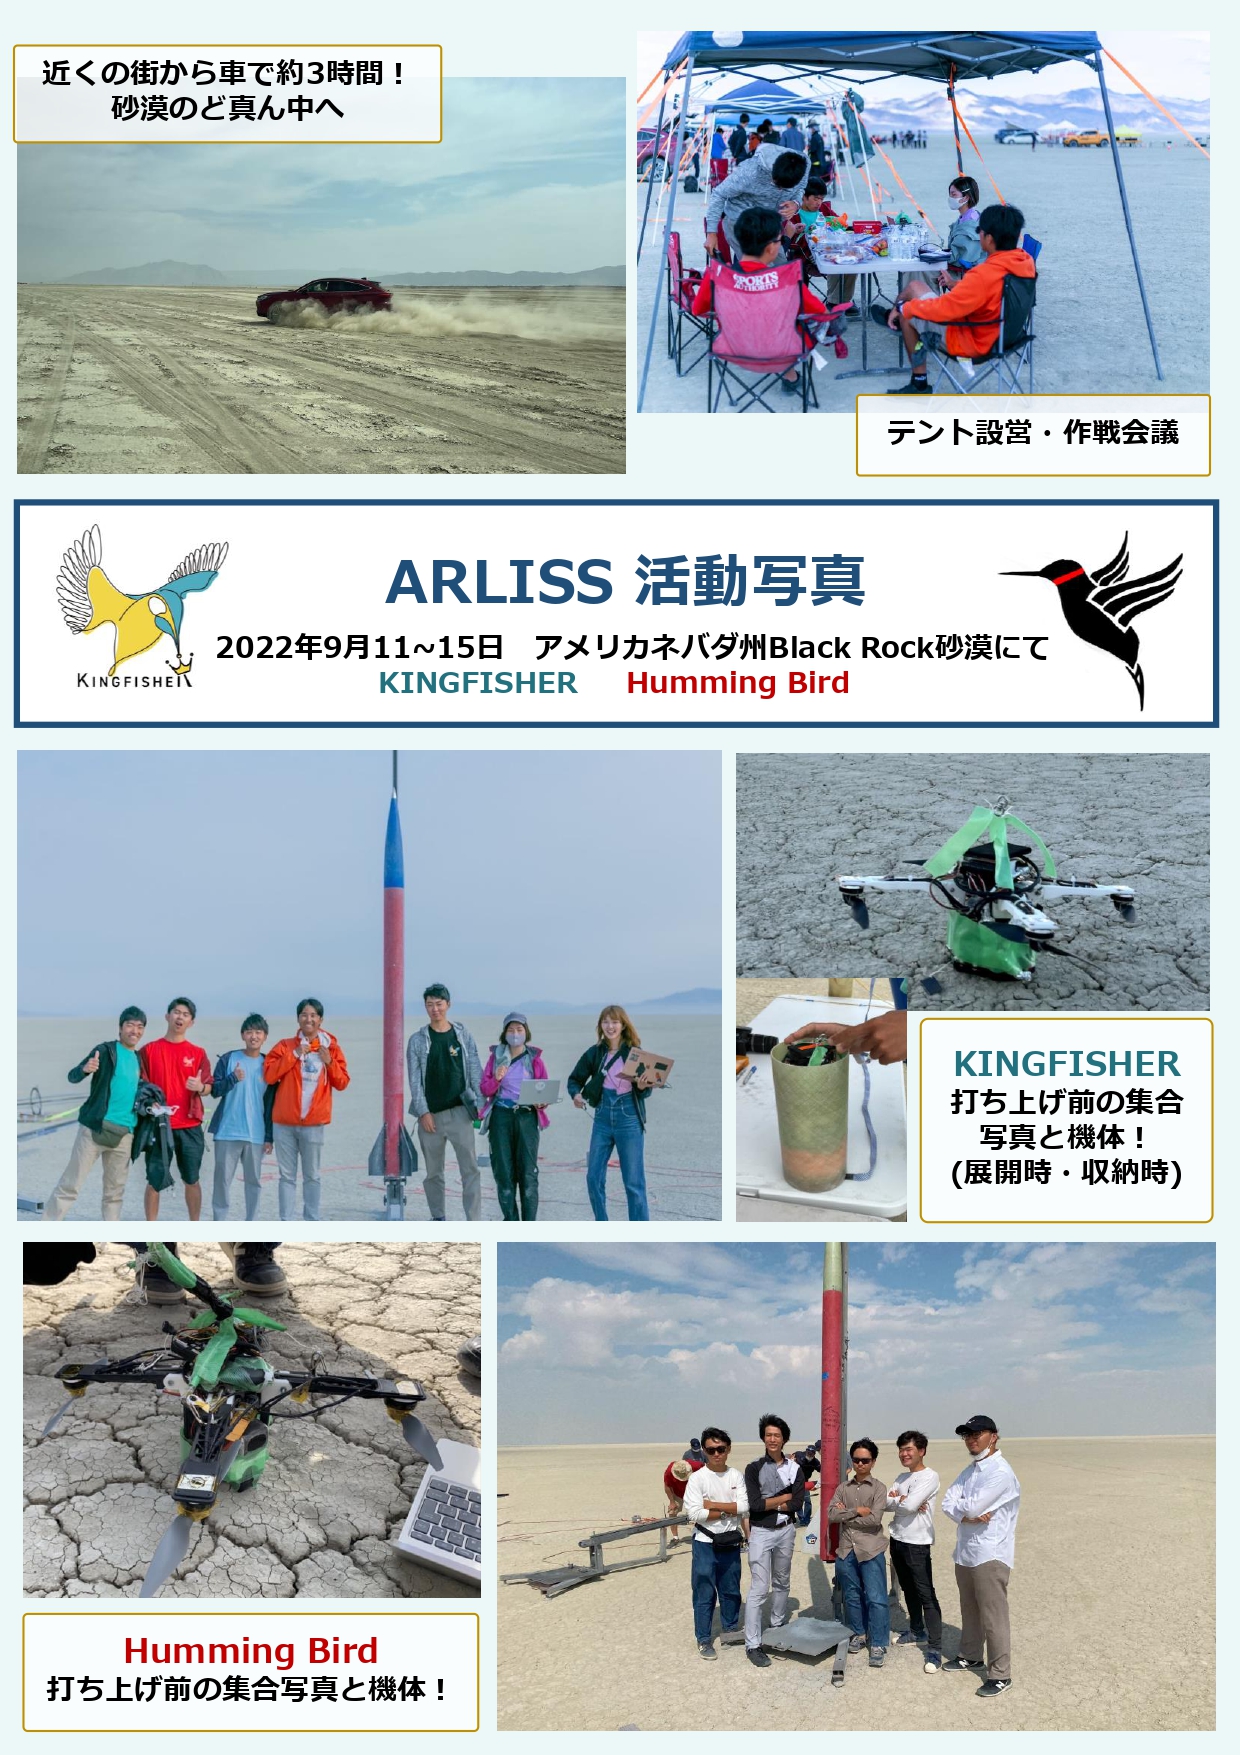 ARLISS活動写真 (1)_page-0001.jpg